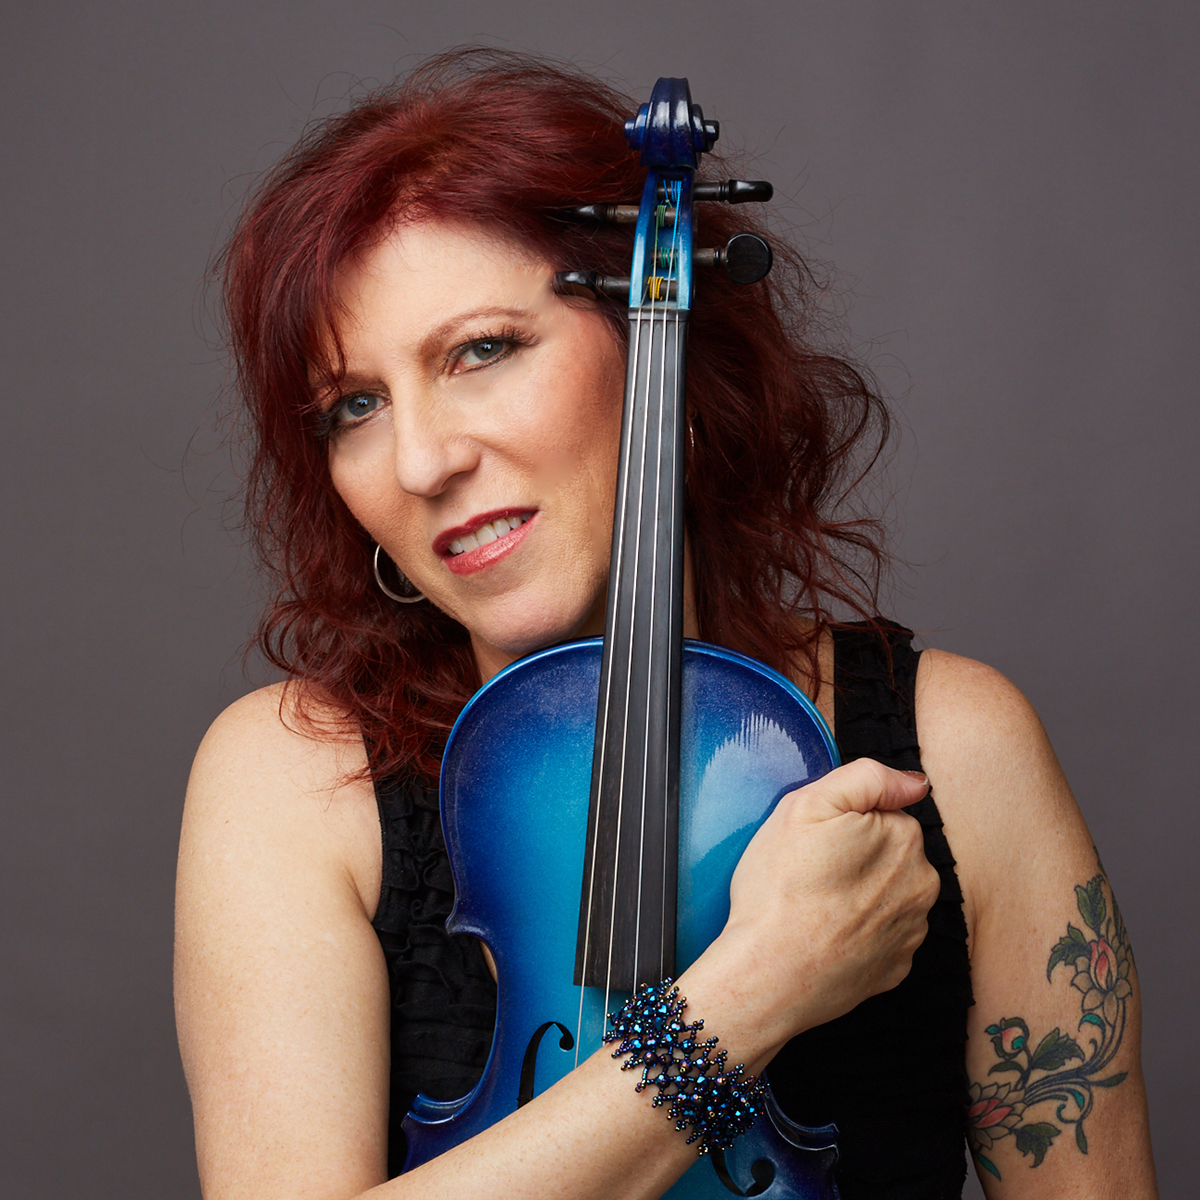 Deni Bonet with her arm around a blue violin 